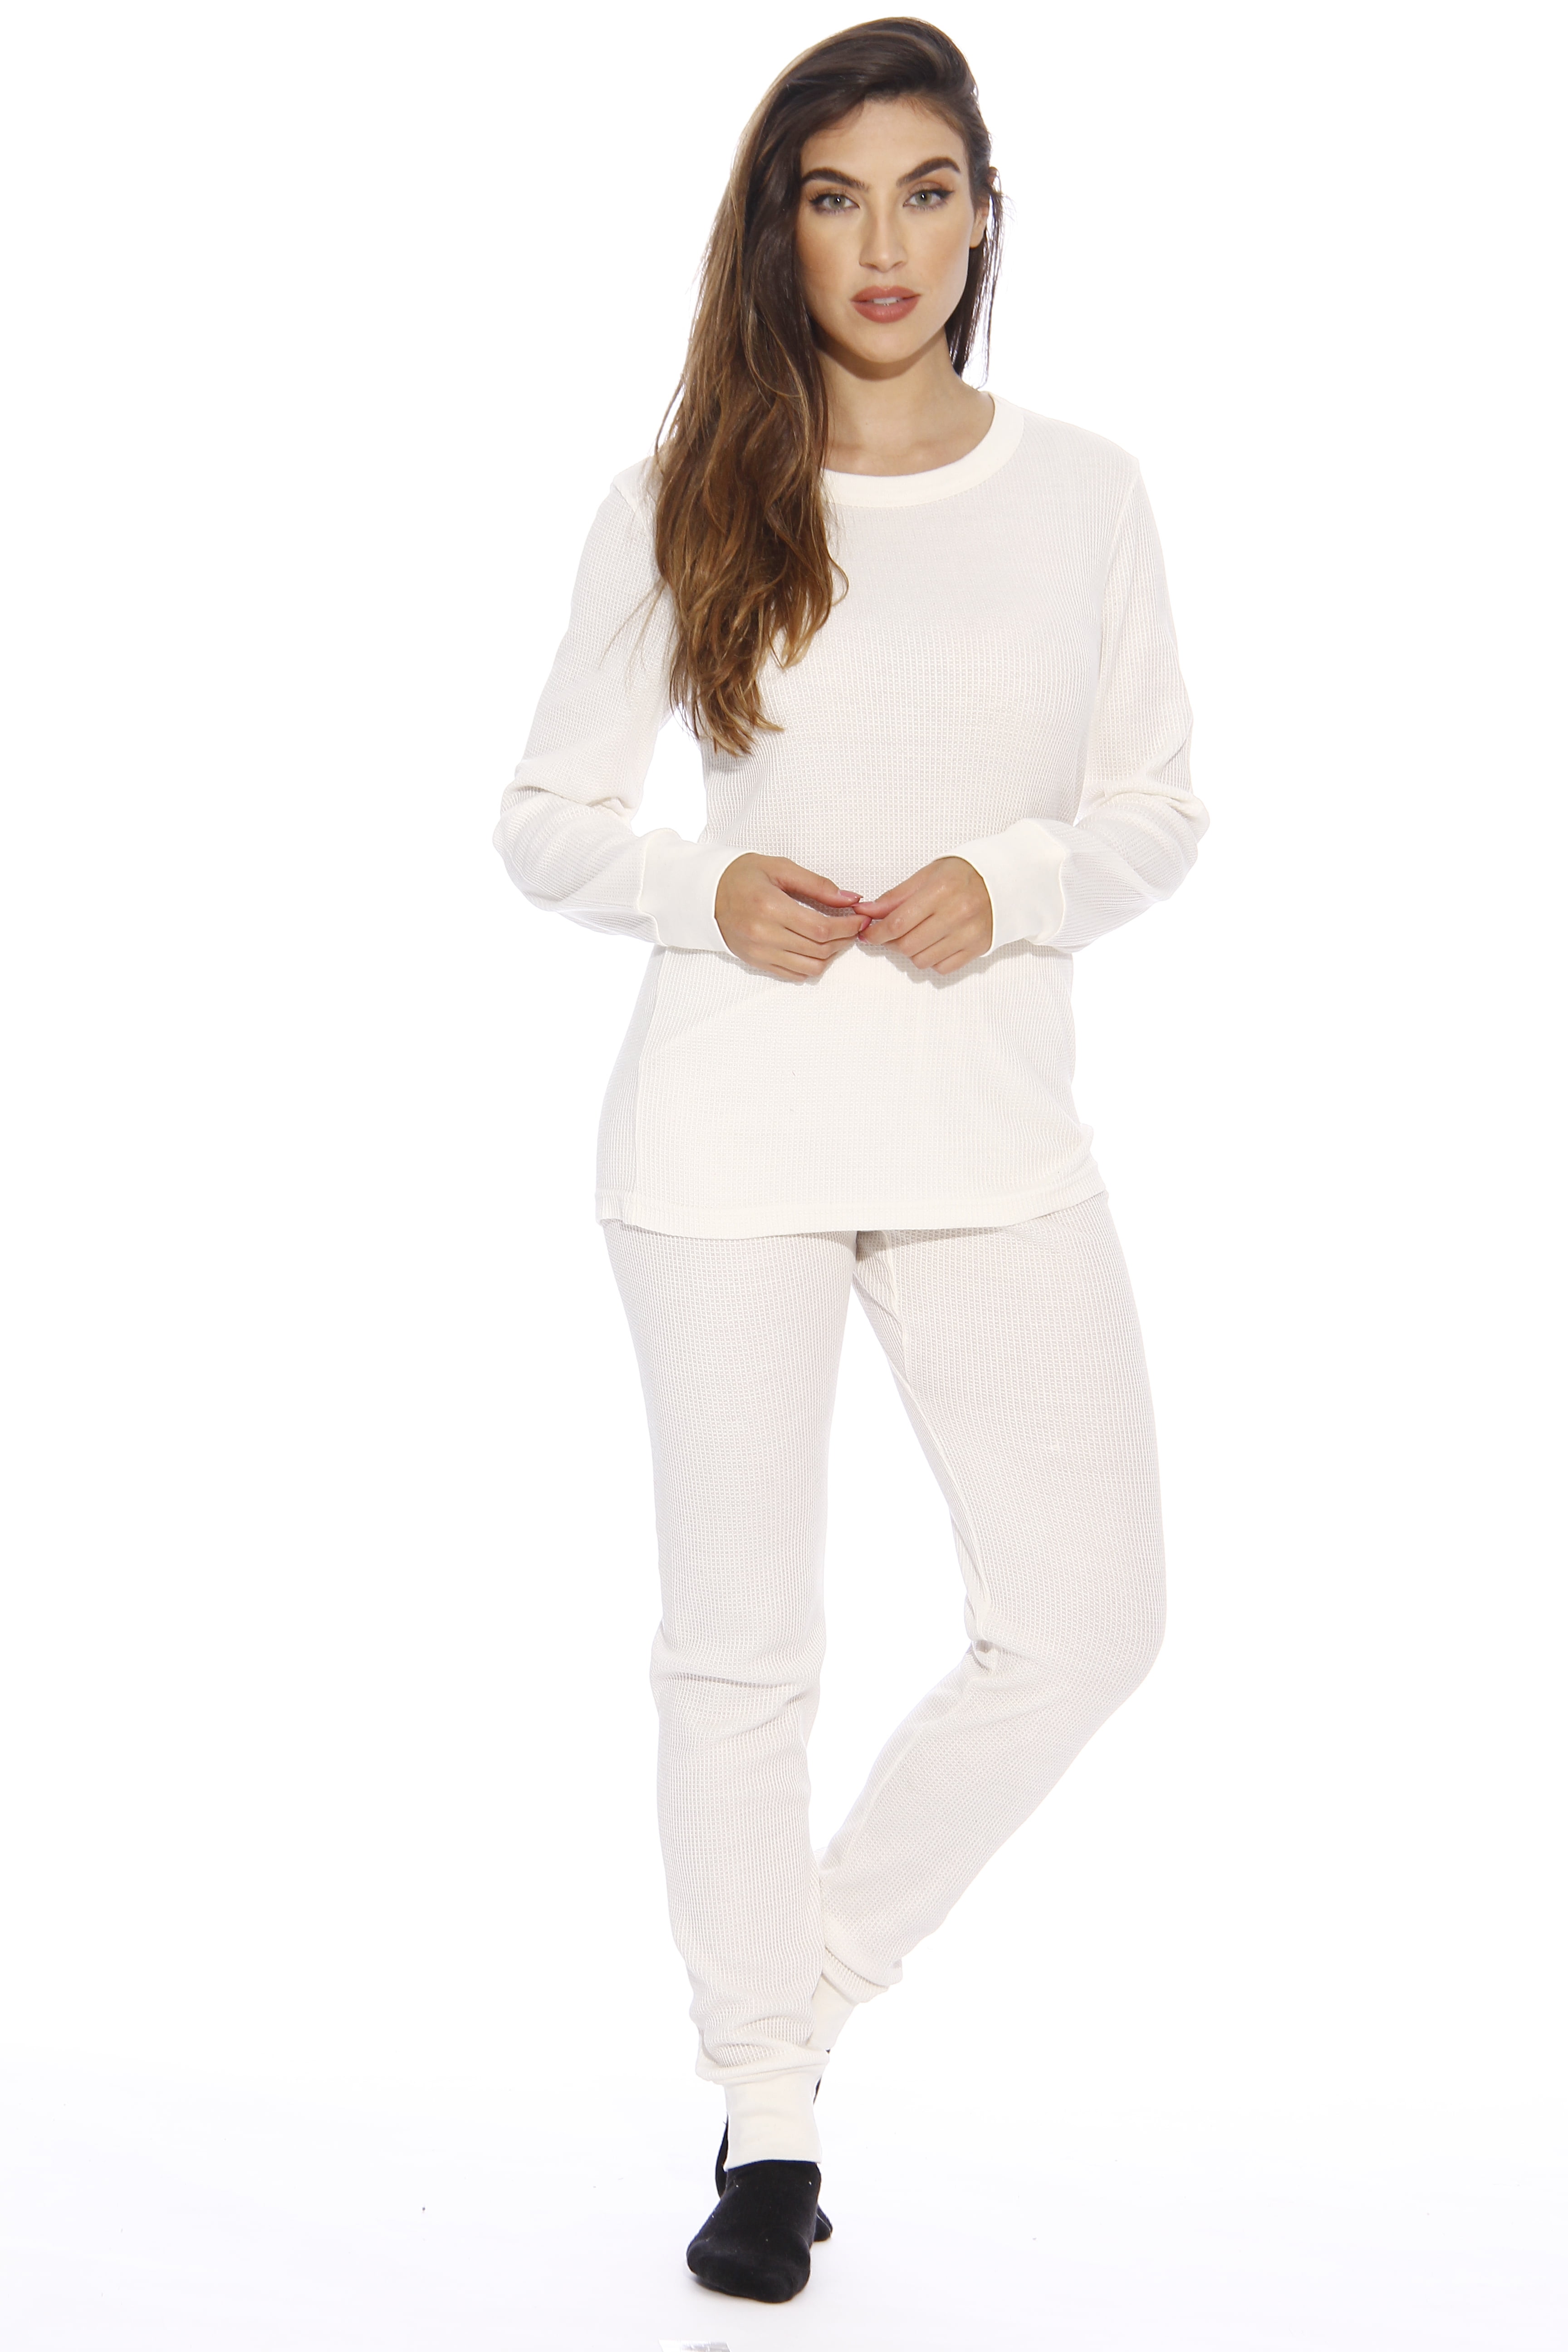 Just Love Women's Thermal Underwear Pajamas Set (White, X-Small) 